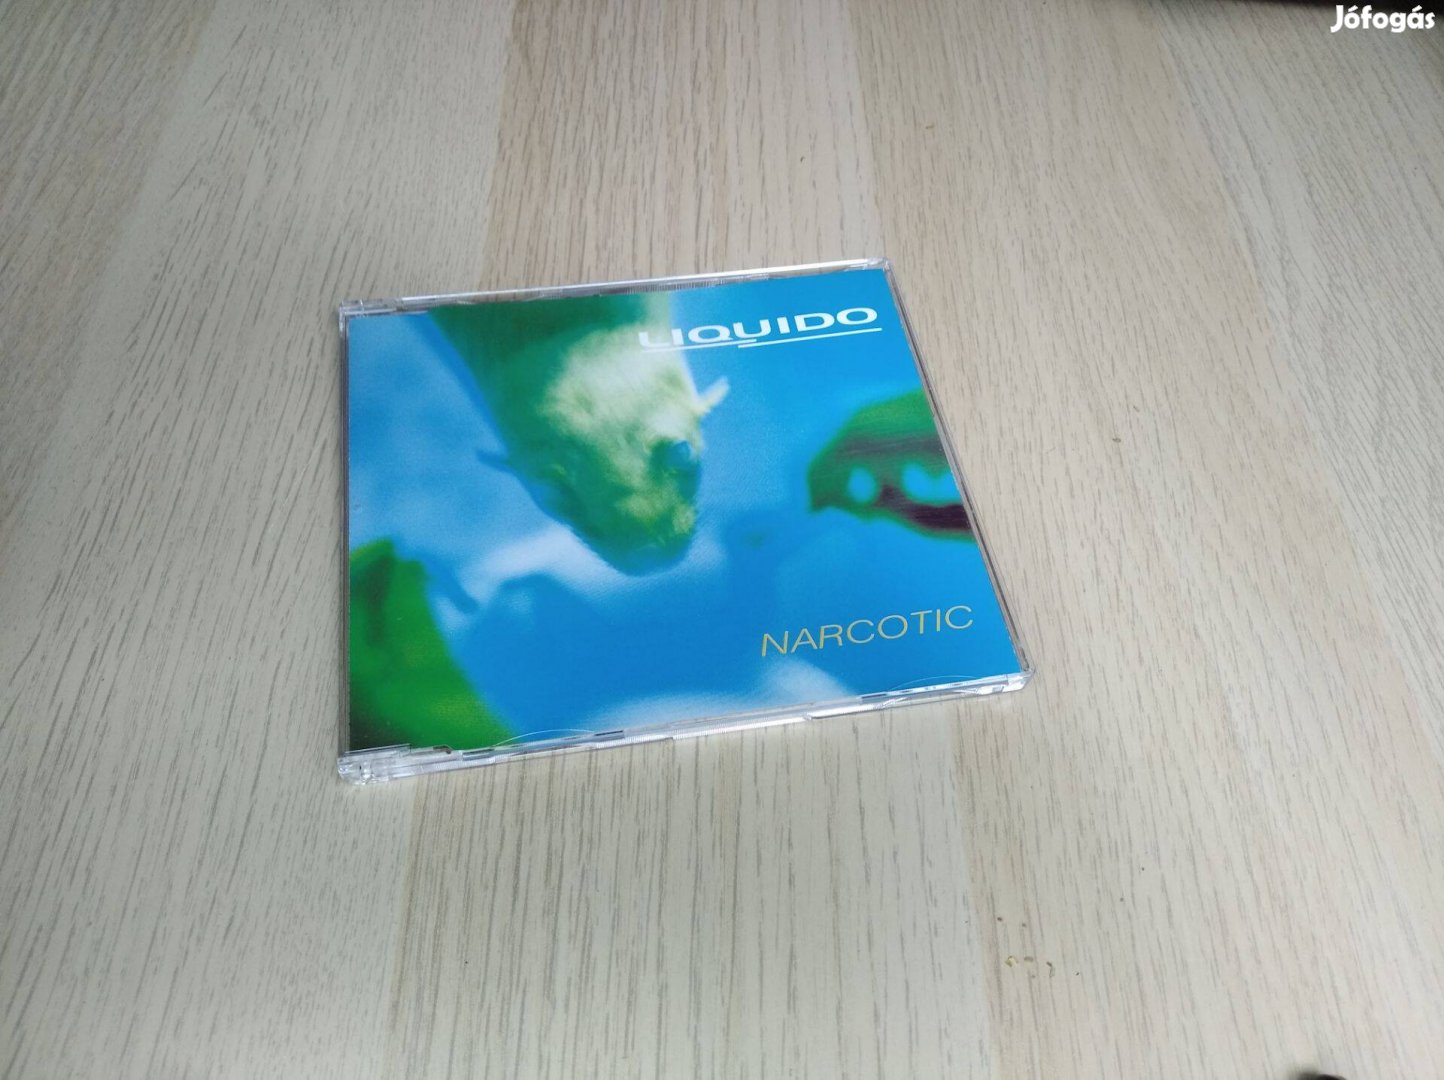 Liquido - Narcotic / Single CD